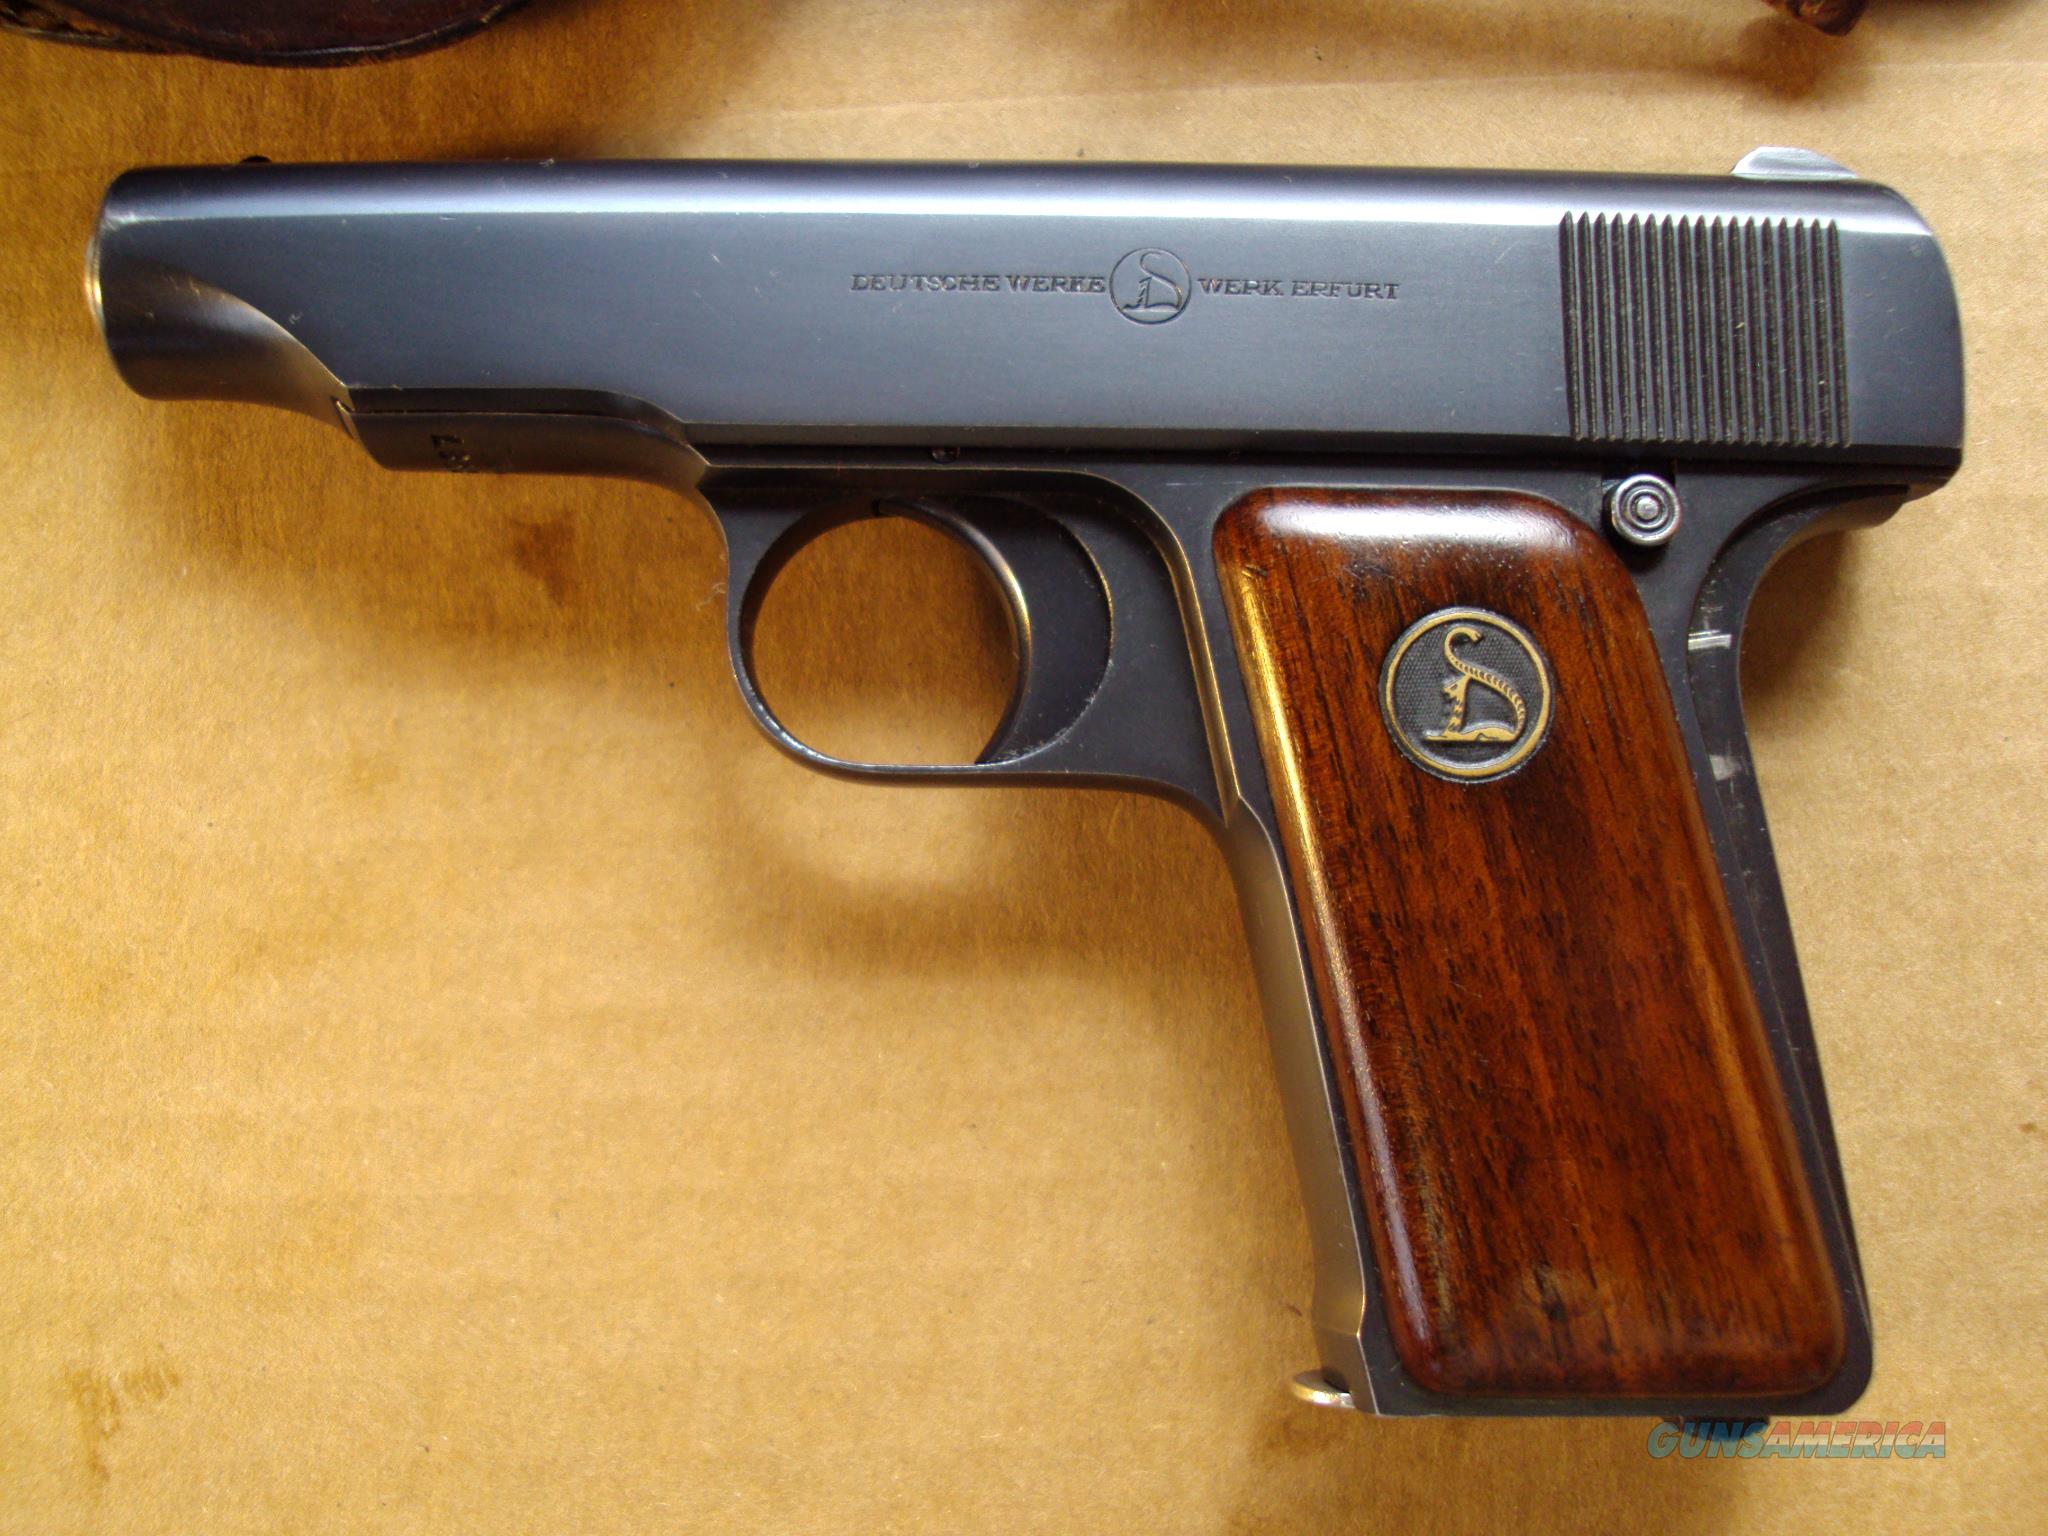 deutsche werke ortgies pistol for sale